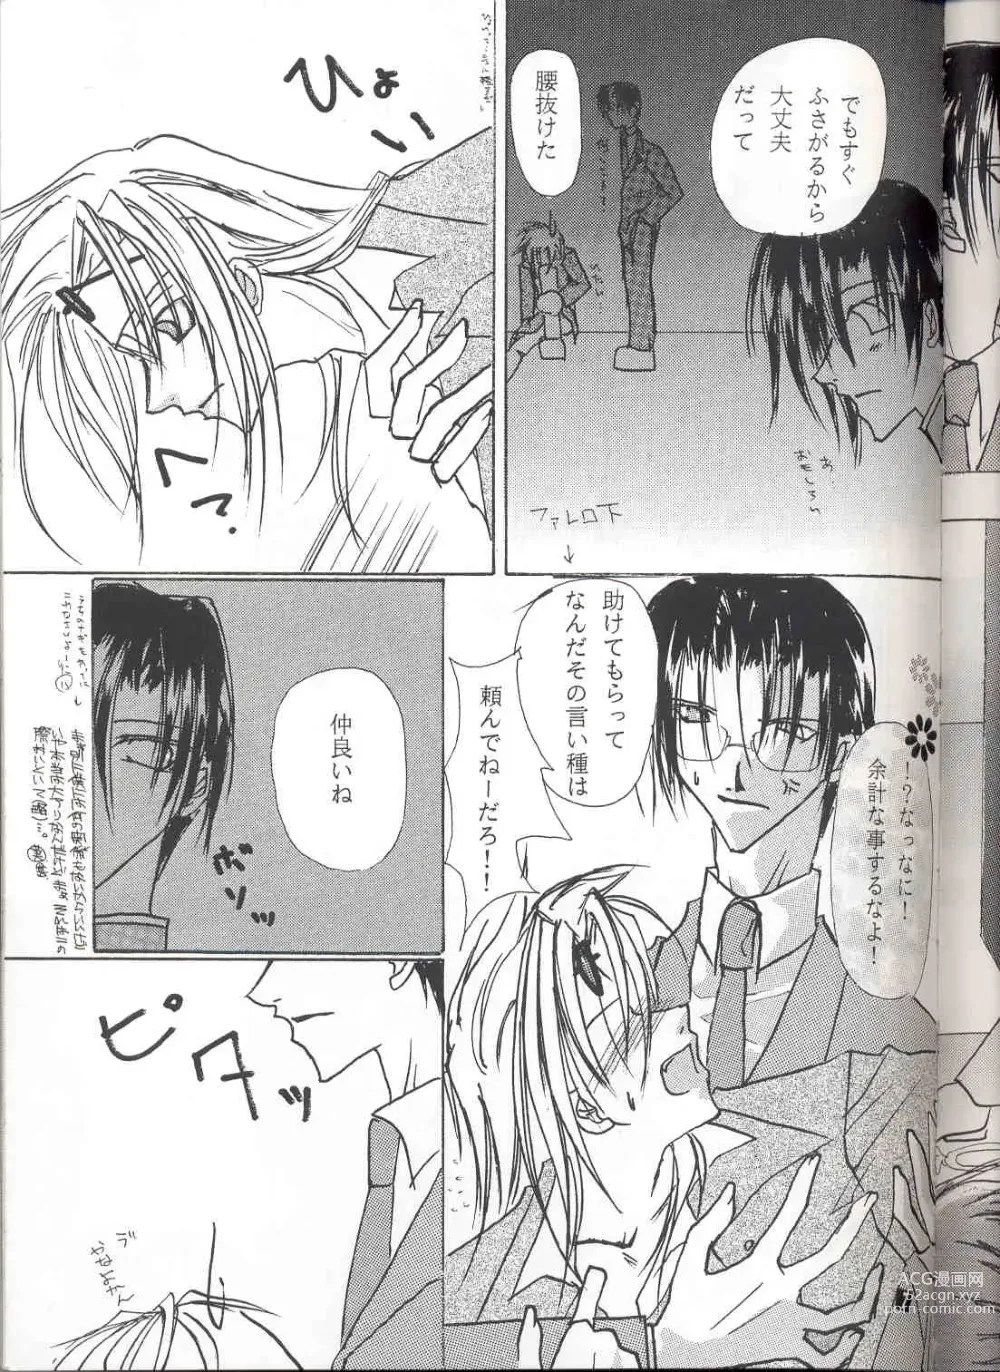 Page 6 of doujinshi Sentimental